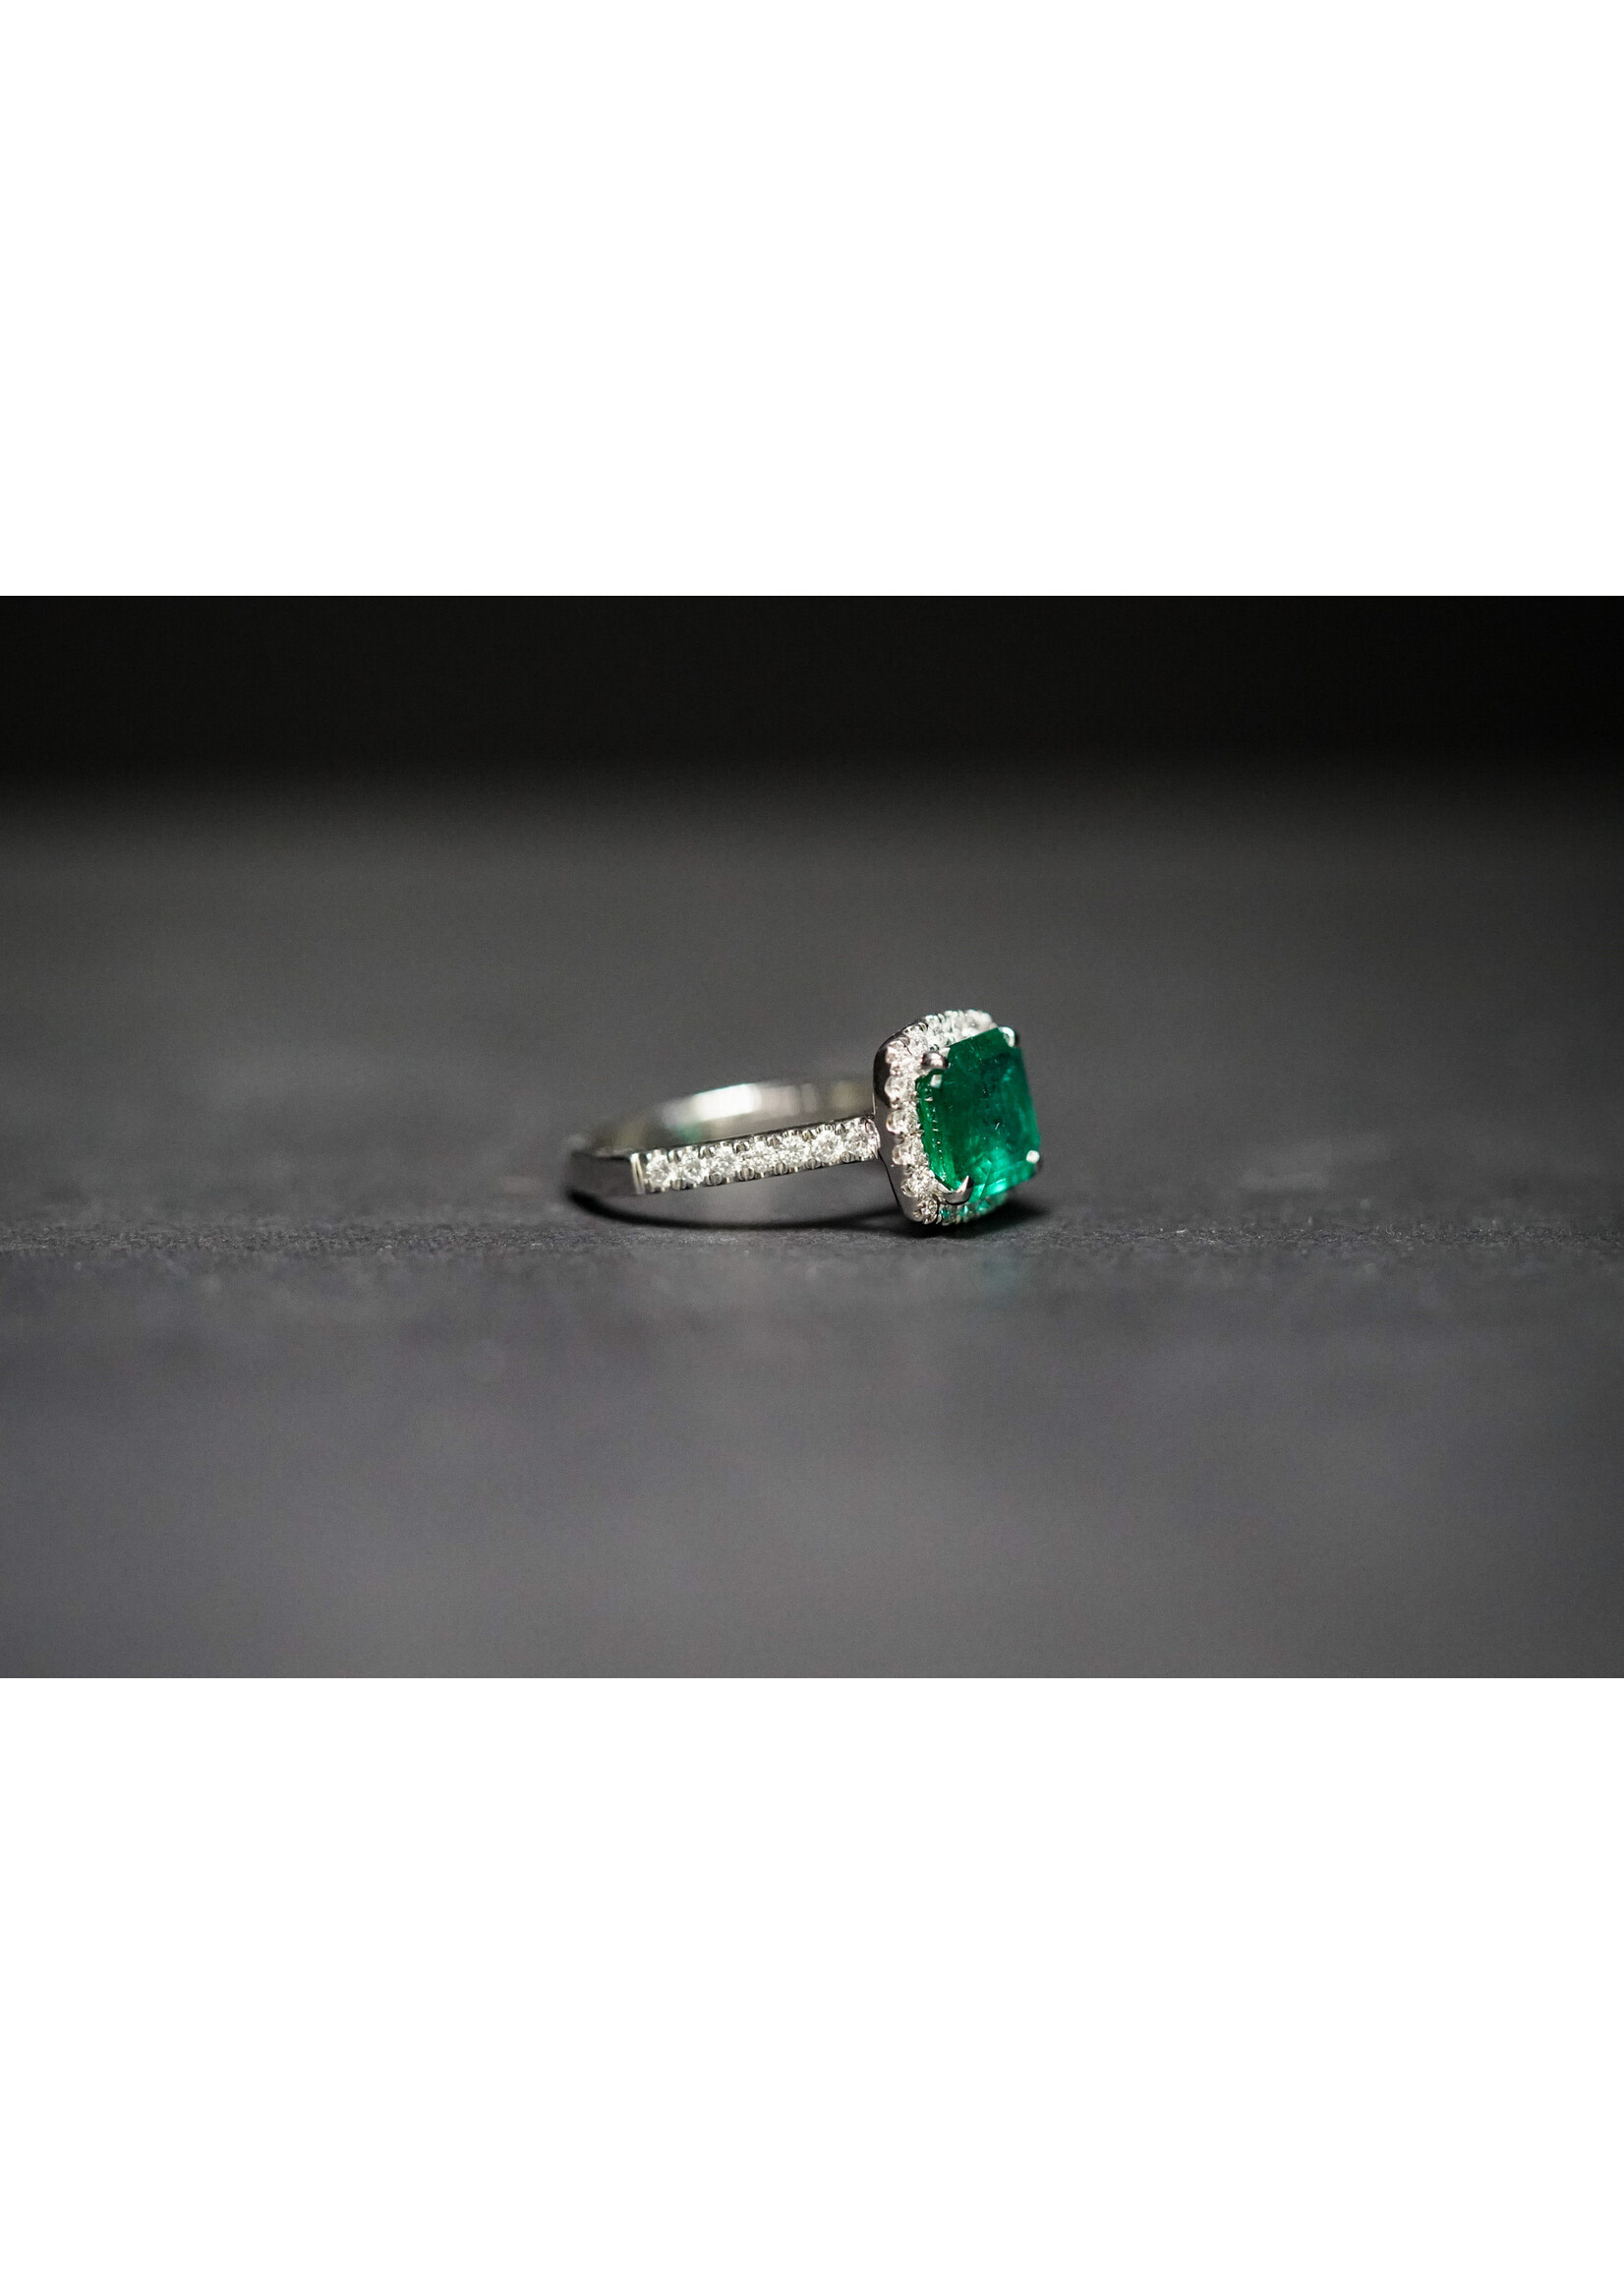 18KW 4.80g 2.72ctw (2.20ctr) Emerald & Diamond Halo Ring (size 6.5)